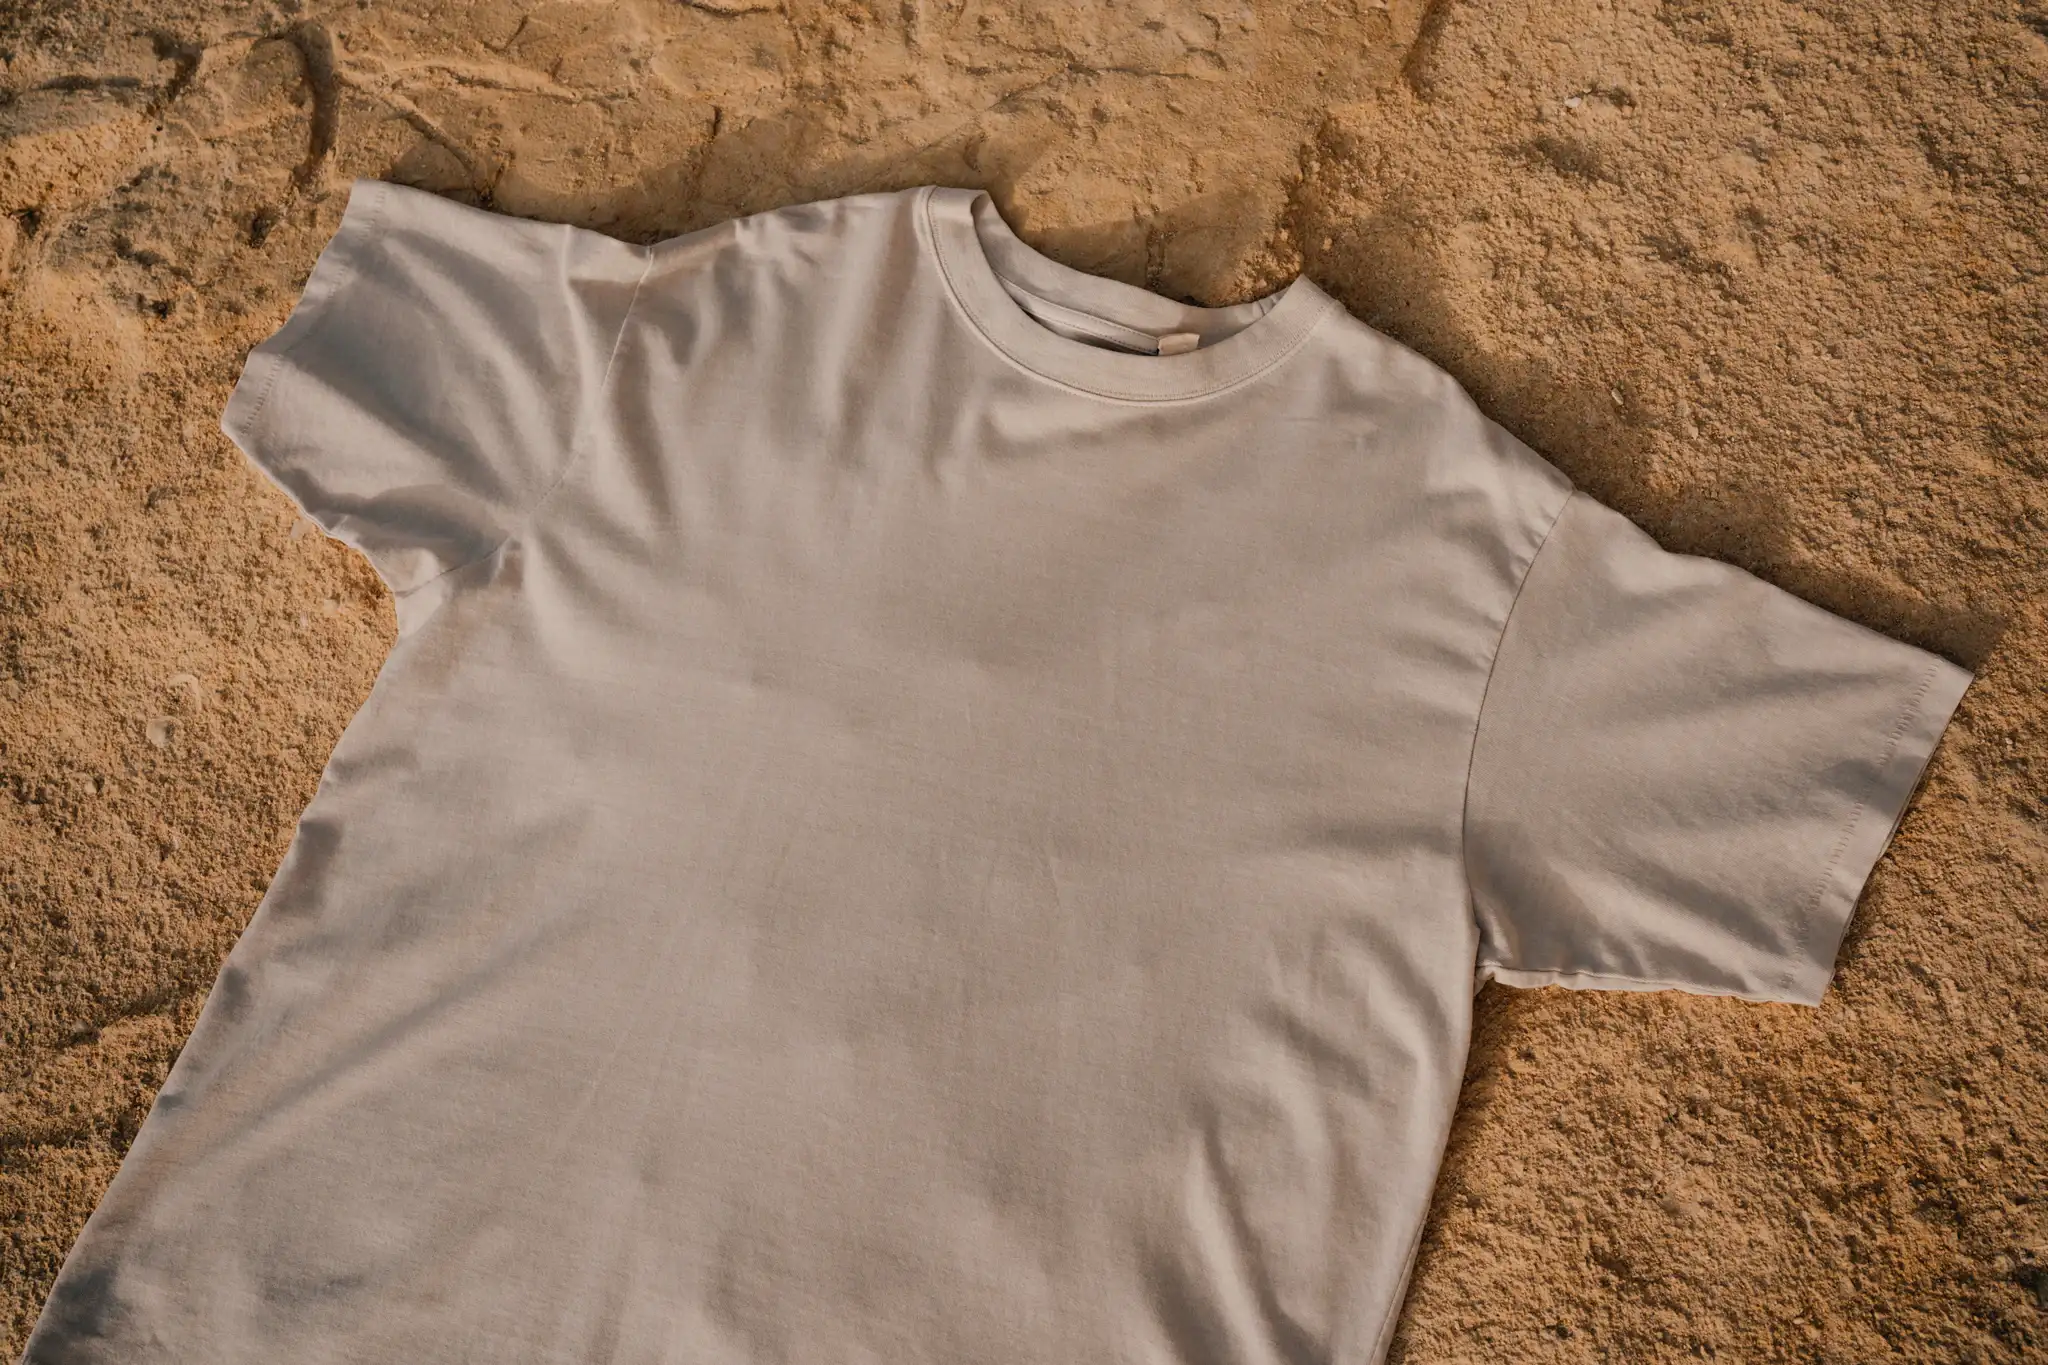 T-Shirt mock-up on a rocky surface